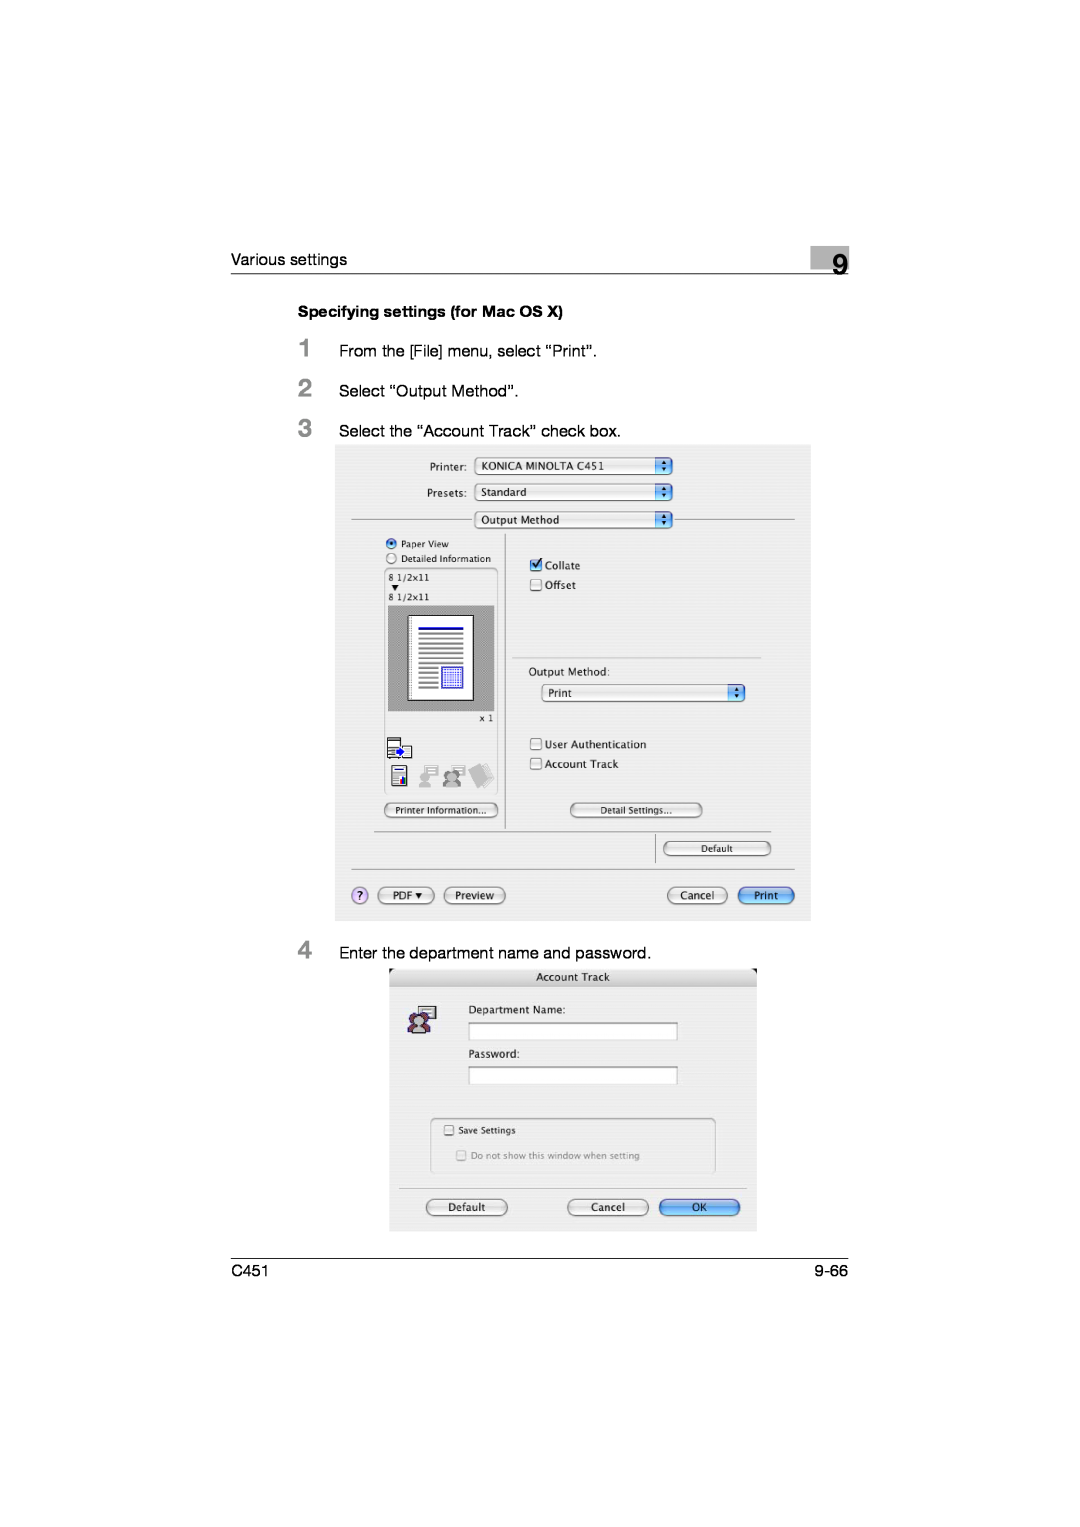 Konica Minolta C451 manual Various settings, Specifying settings for Mac OS, From the File menu, select “Print”, 9-66 